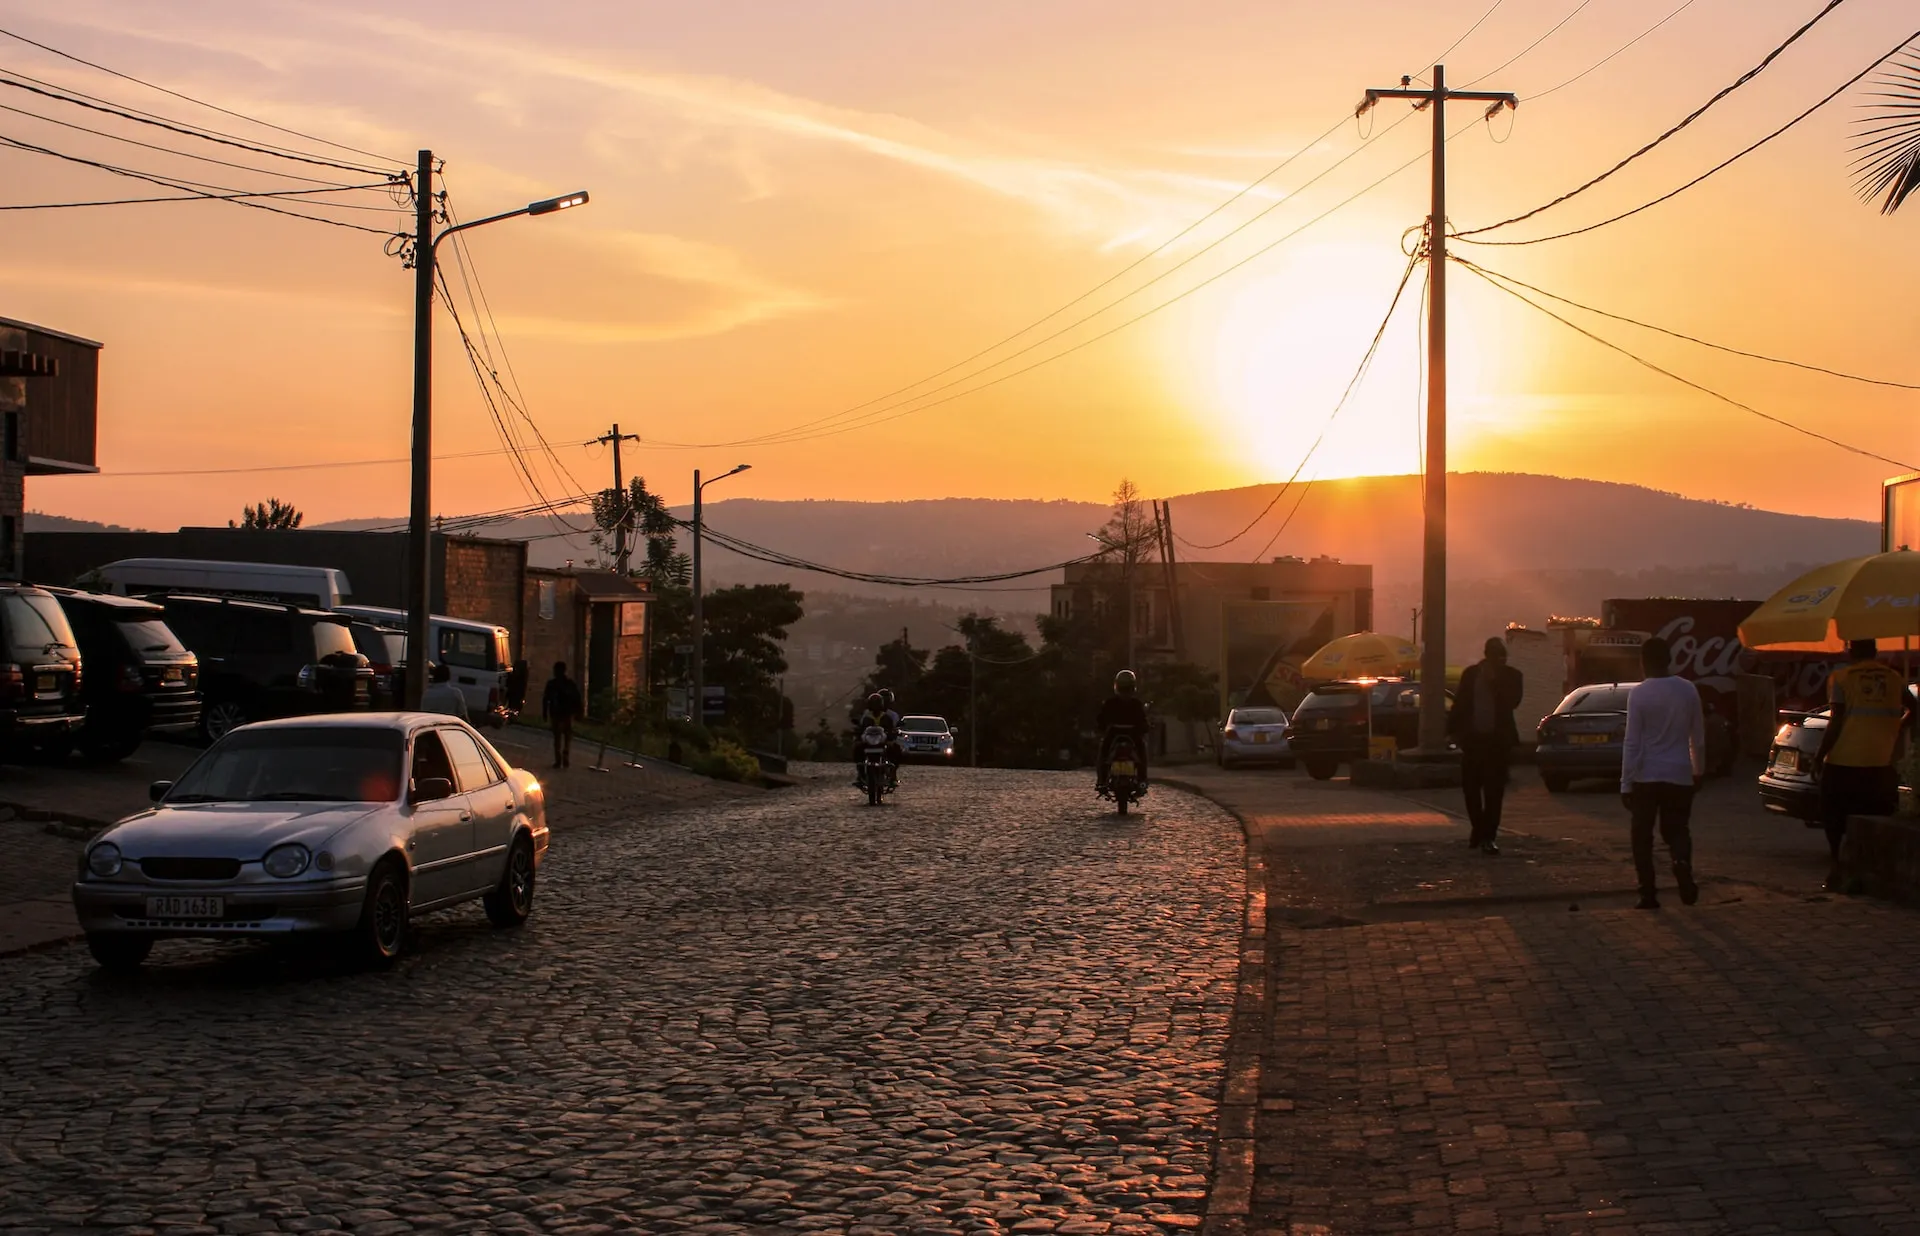 Street in Kigali. Source: Photo by Michael Muli on Unsplash